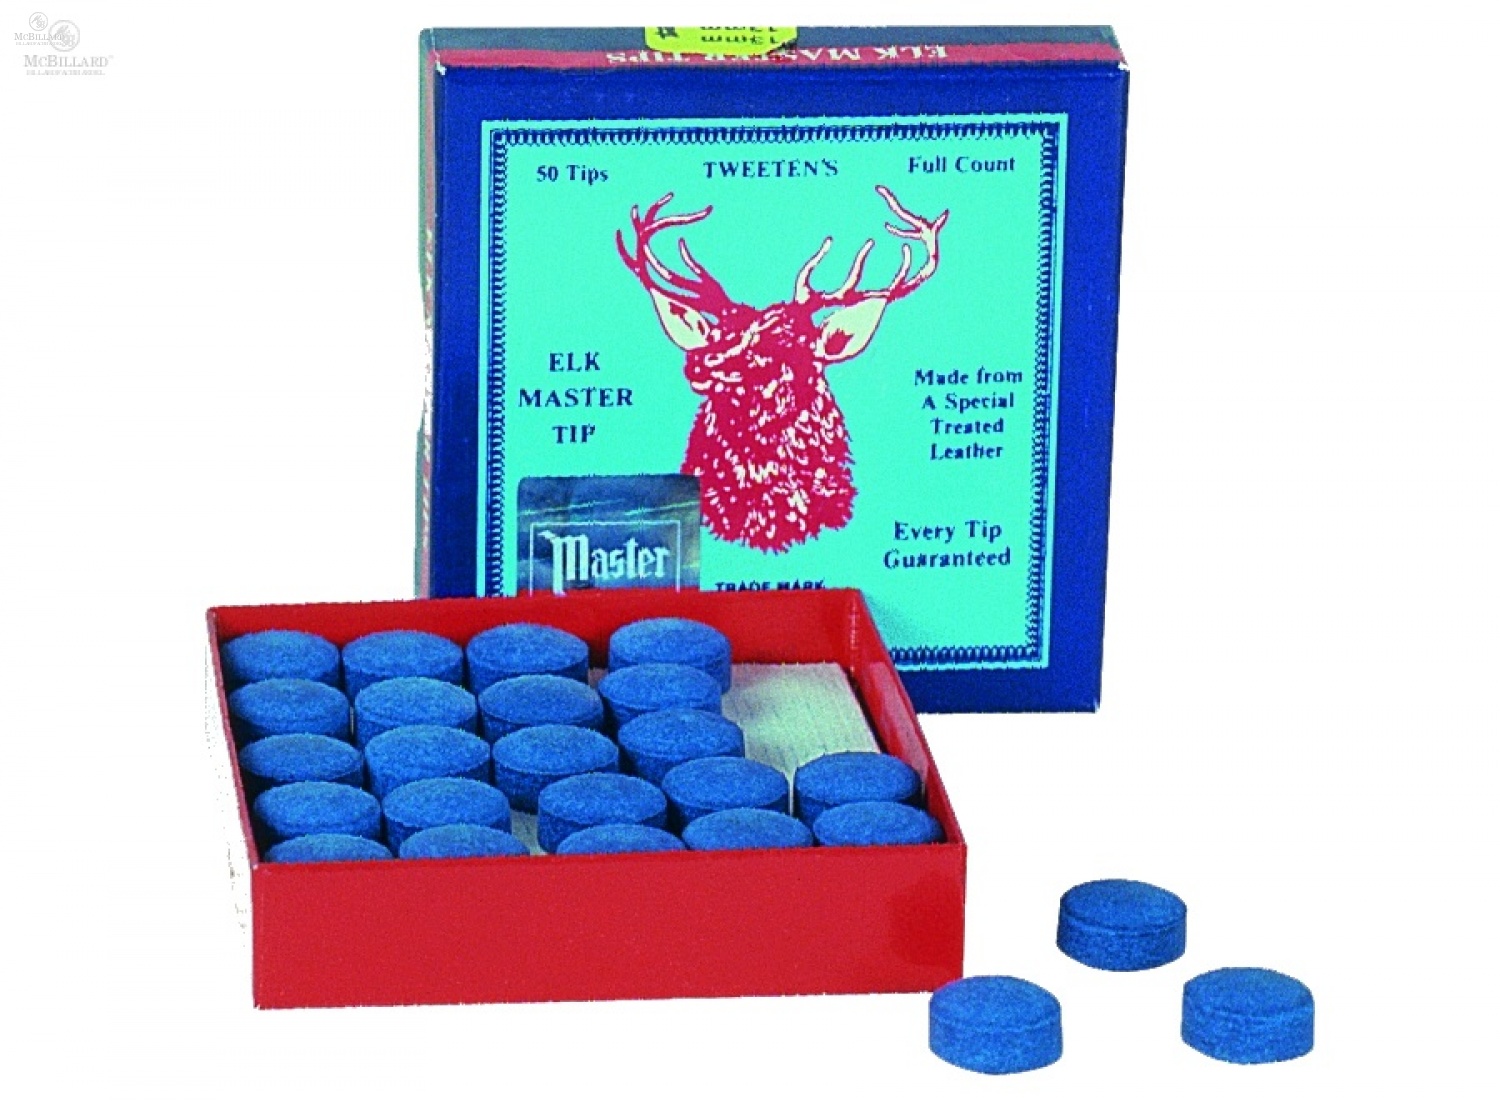 12 mm, 13 mm and 14 mm Tweeten Elk Master Soft Leather Billiard/Pool Cue Tips Box of 50 